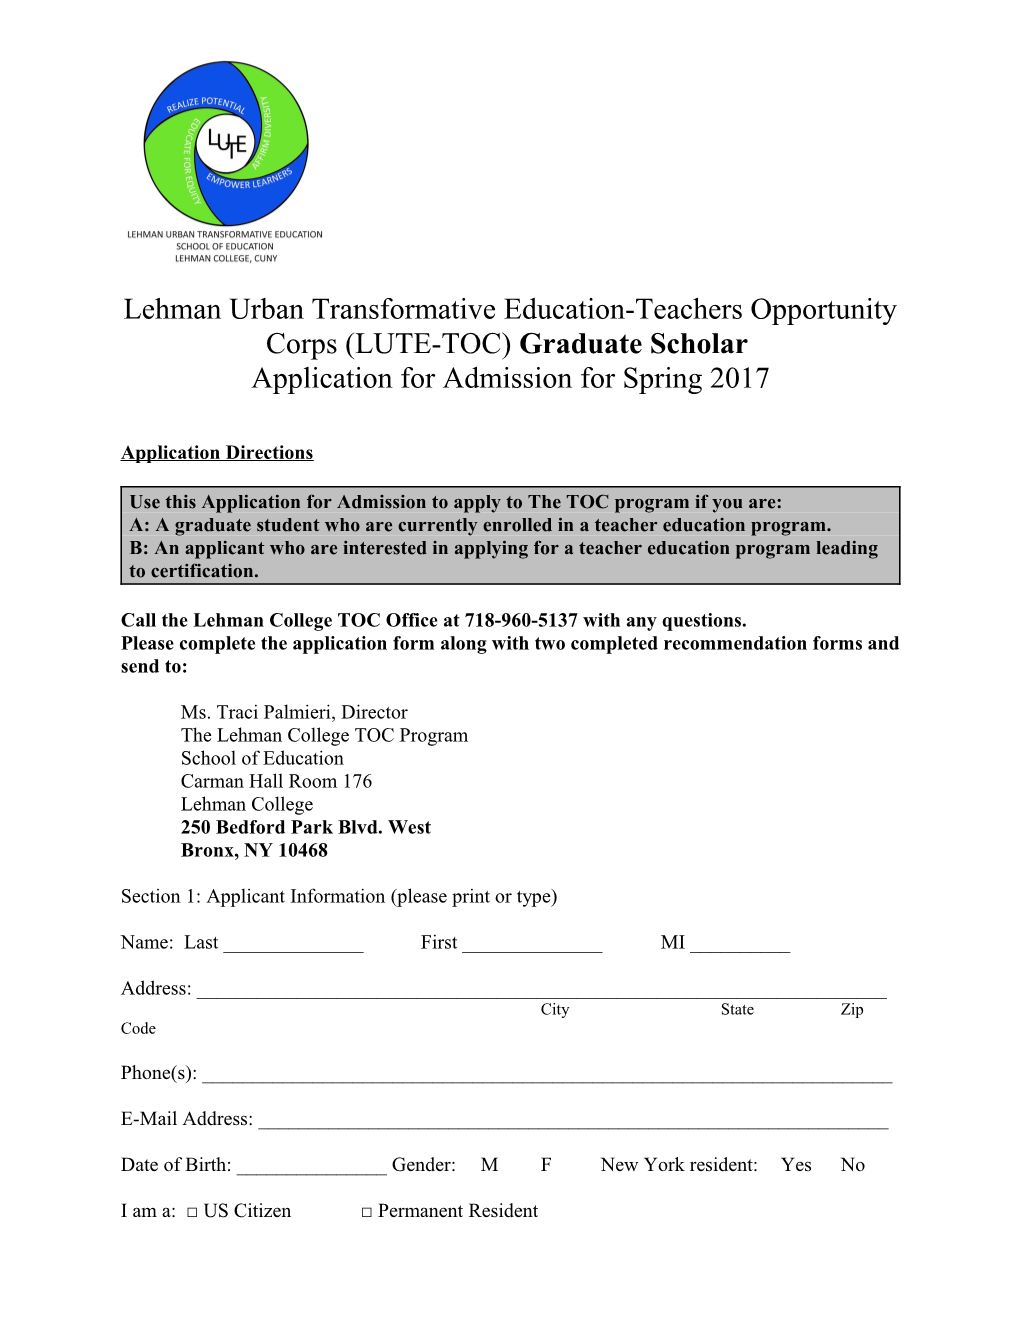 Lehman Urban Transformative Education-Teachers Opportunity Corps (LUTE-TOC) Graduate Scholar